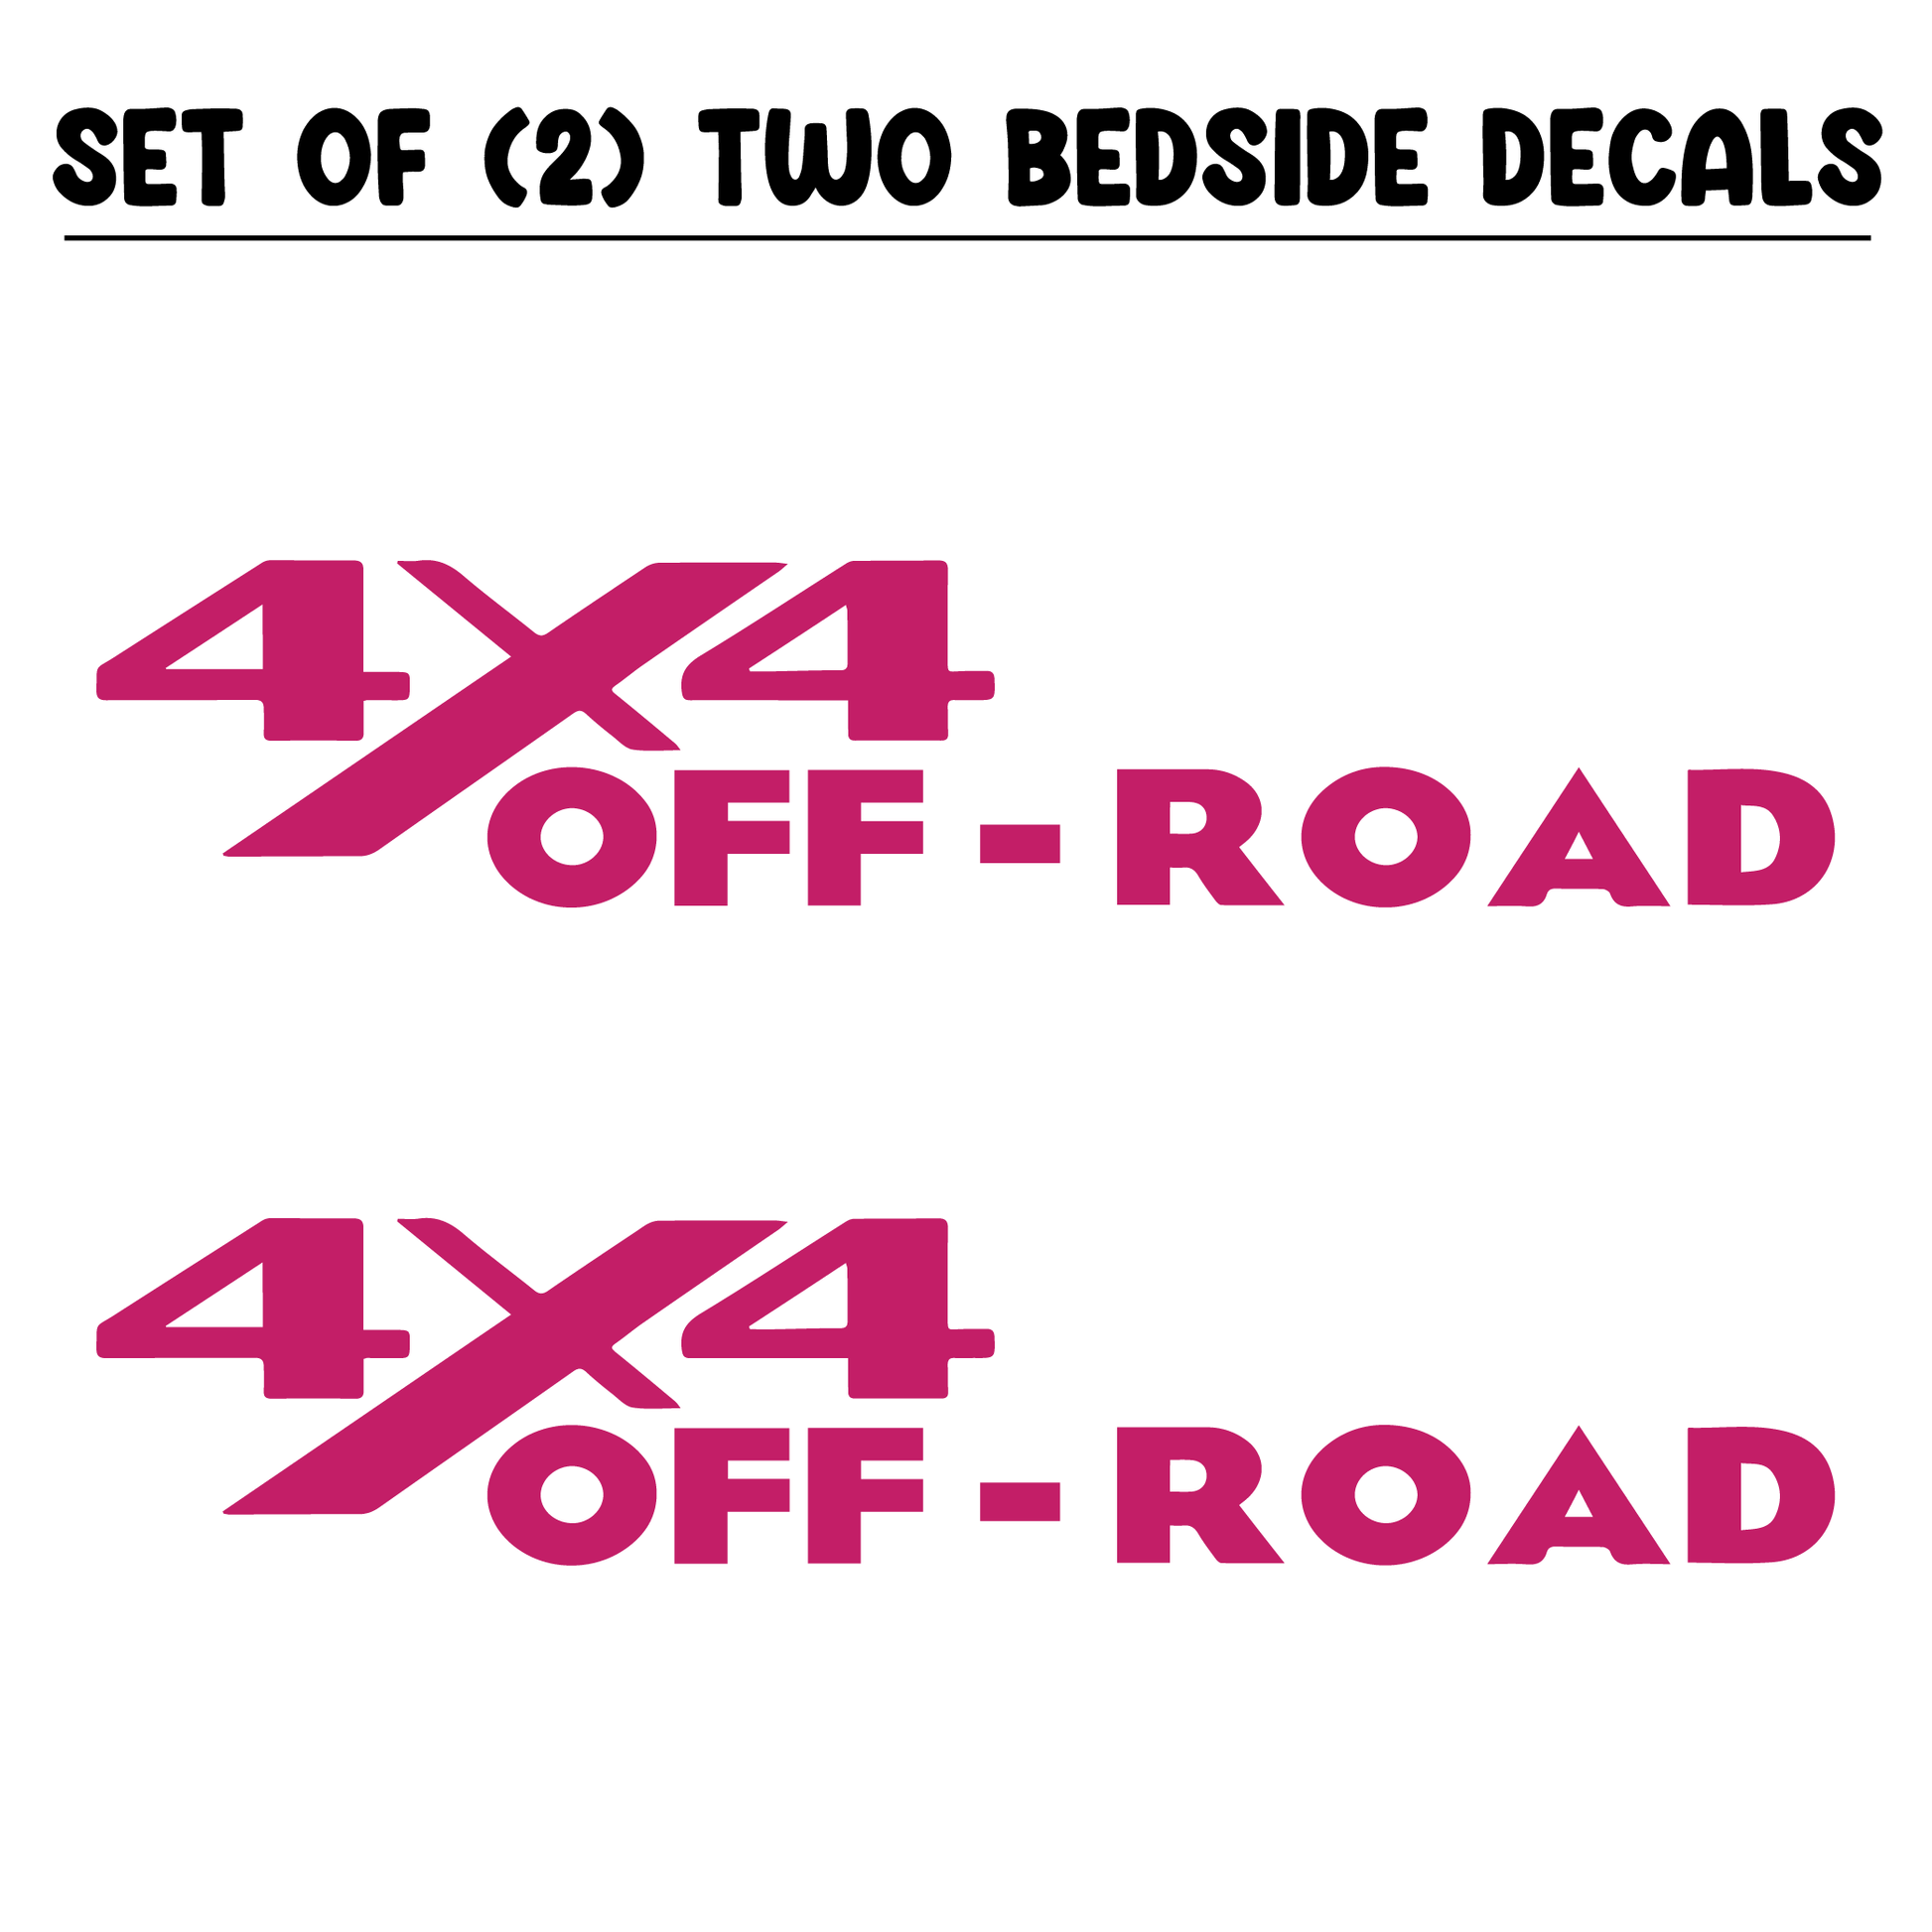 Shop Vinyl Design RAM Trucks 4 x 4 Off Road Replacement Bedside Decals #13 Vehicle 001 Hot Pink Gloss Shop Vinyl Design decals stickers